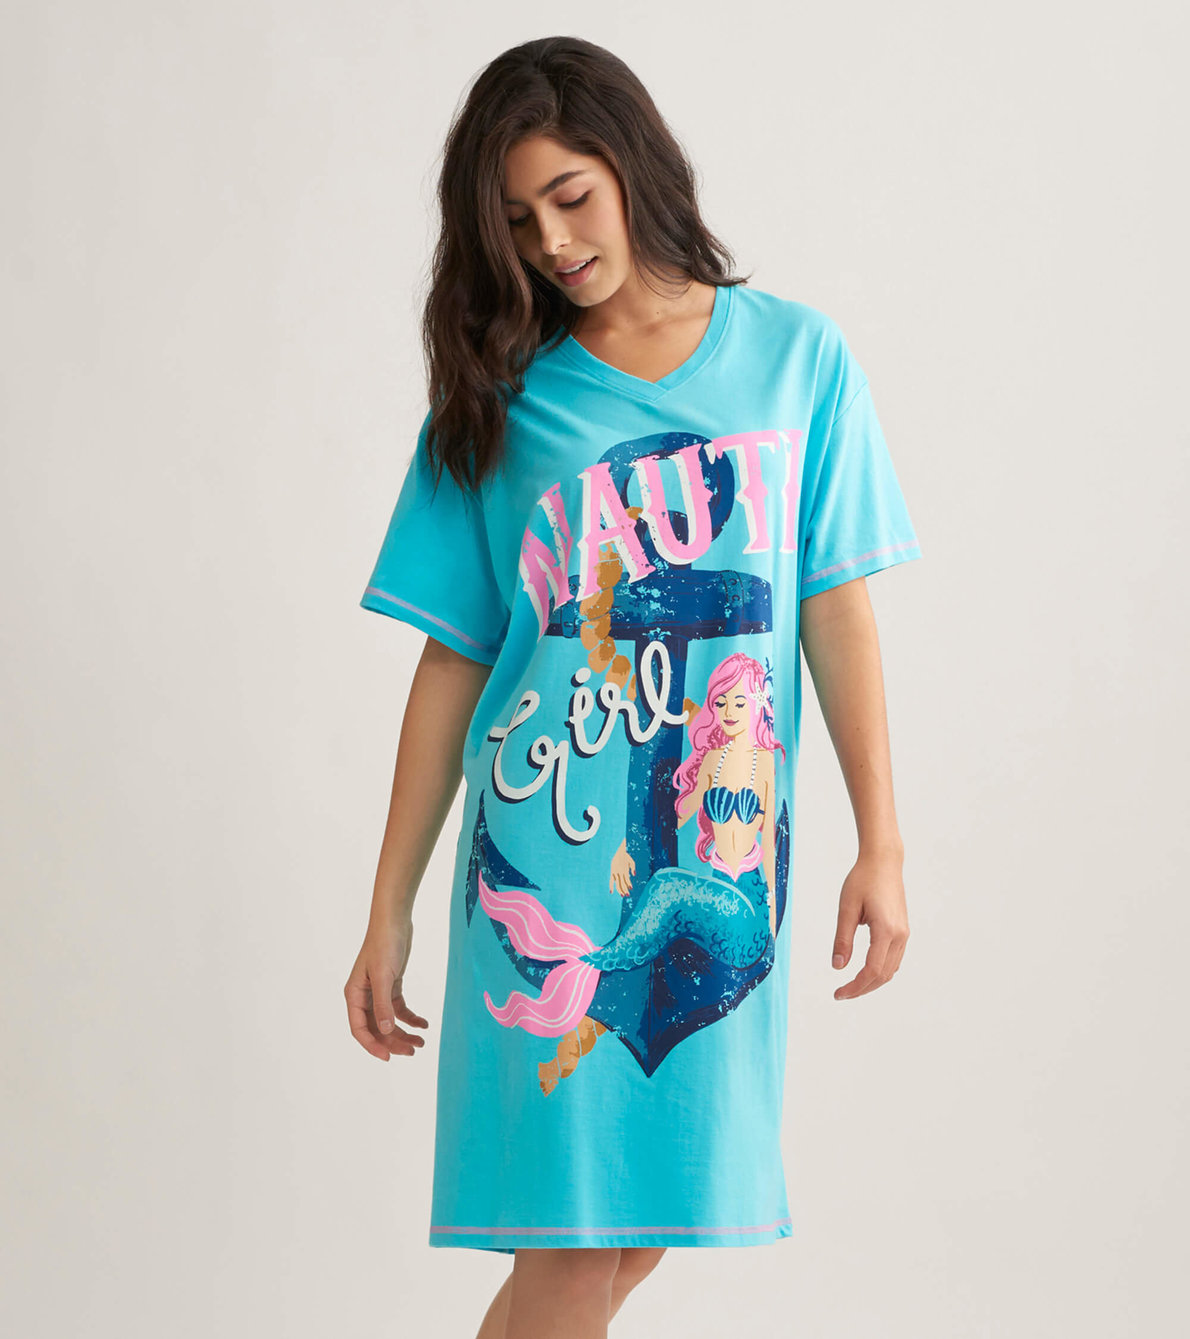 View larger image of Nauti Girl Women's Sleepshirt